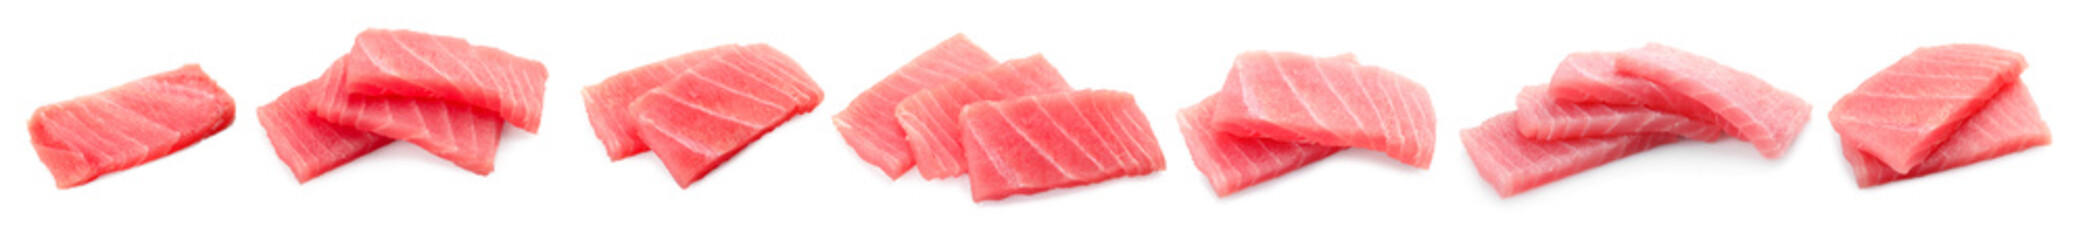 Collage with fresh tuna sashimi isolated on white